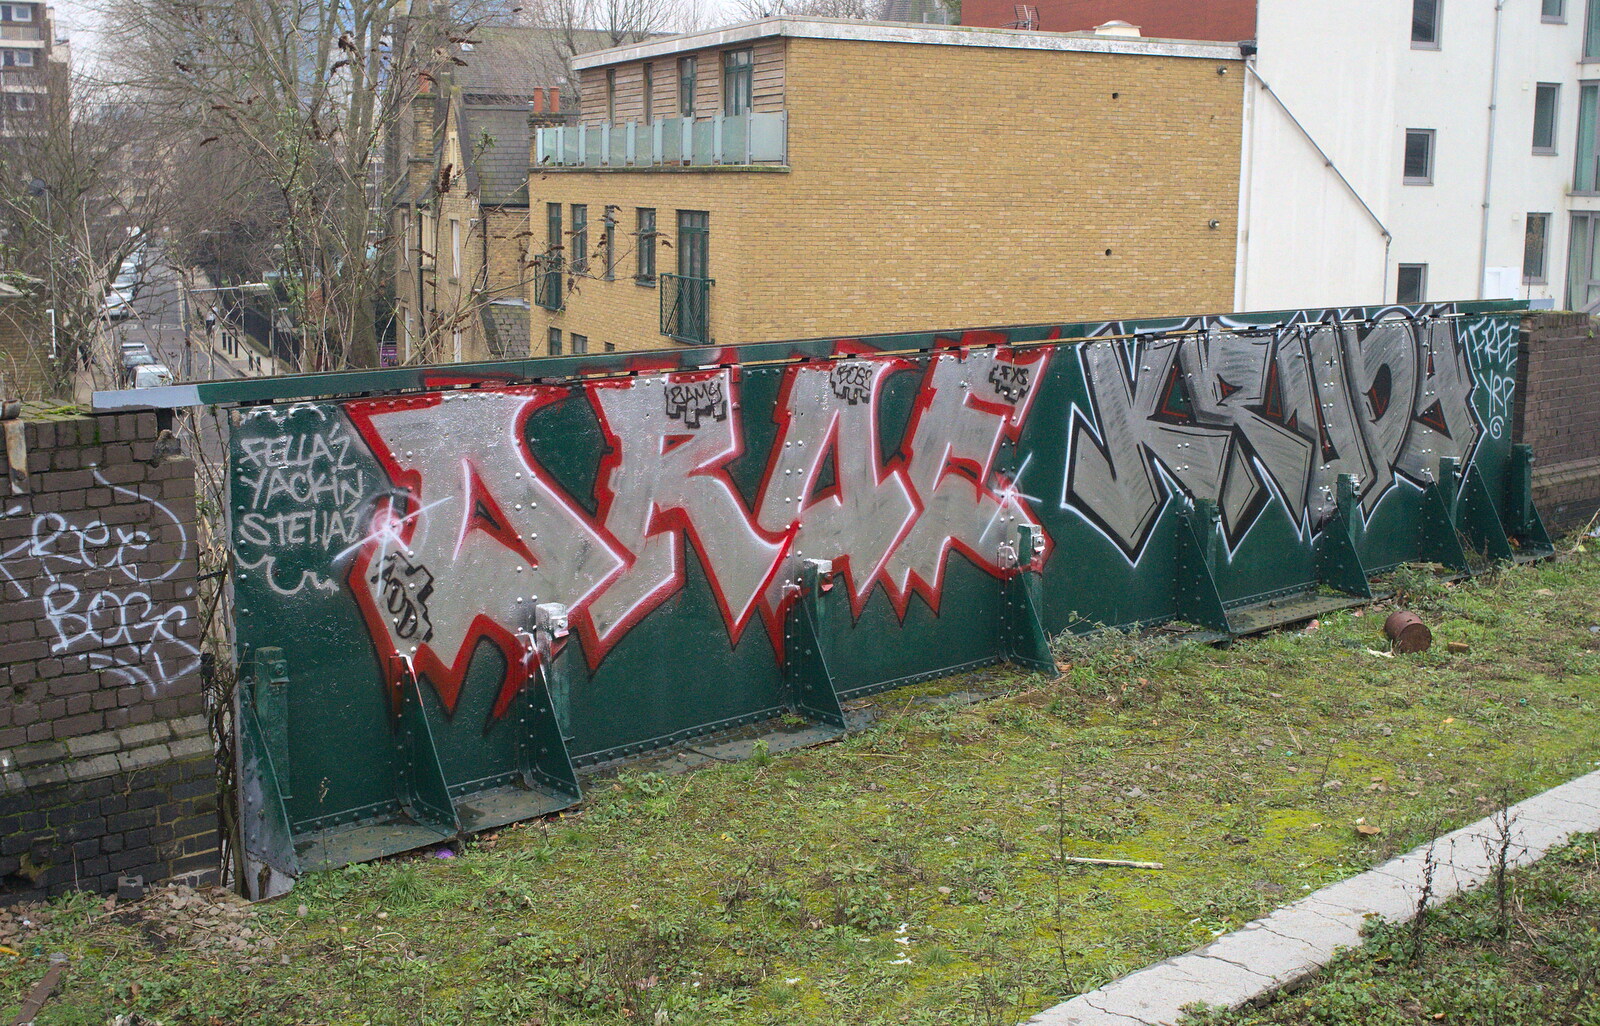 Fellaz yackin Stellaz graffiti from Harry Eats, and a Little London Randomness, Suffolk and London - 12th February 2013